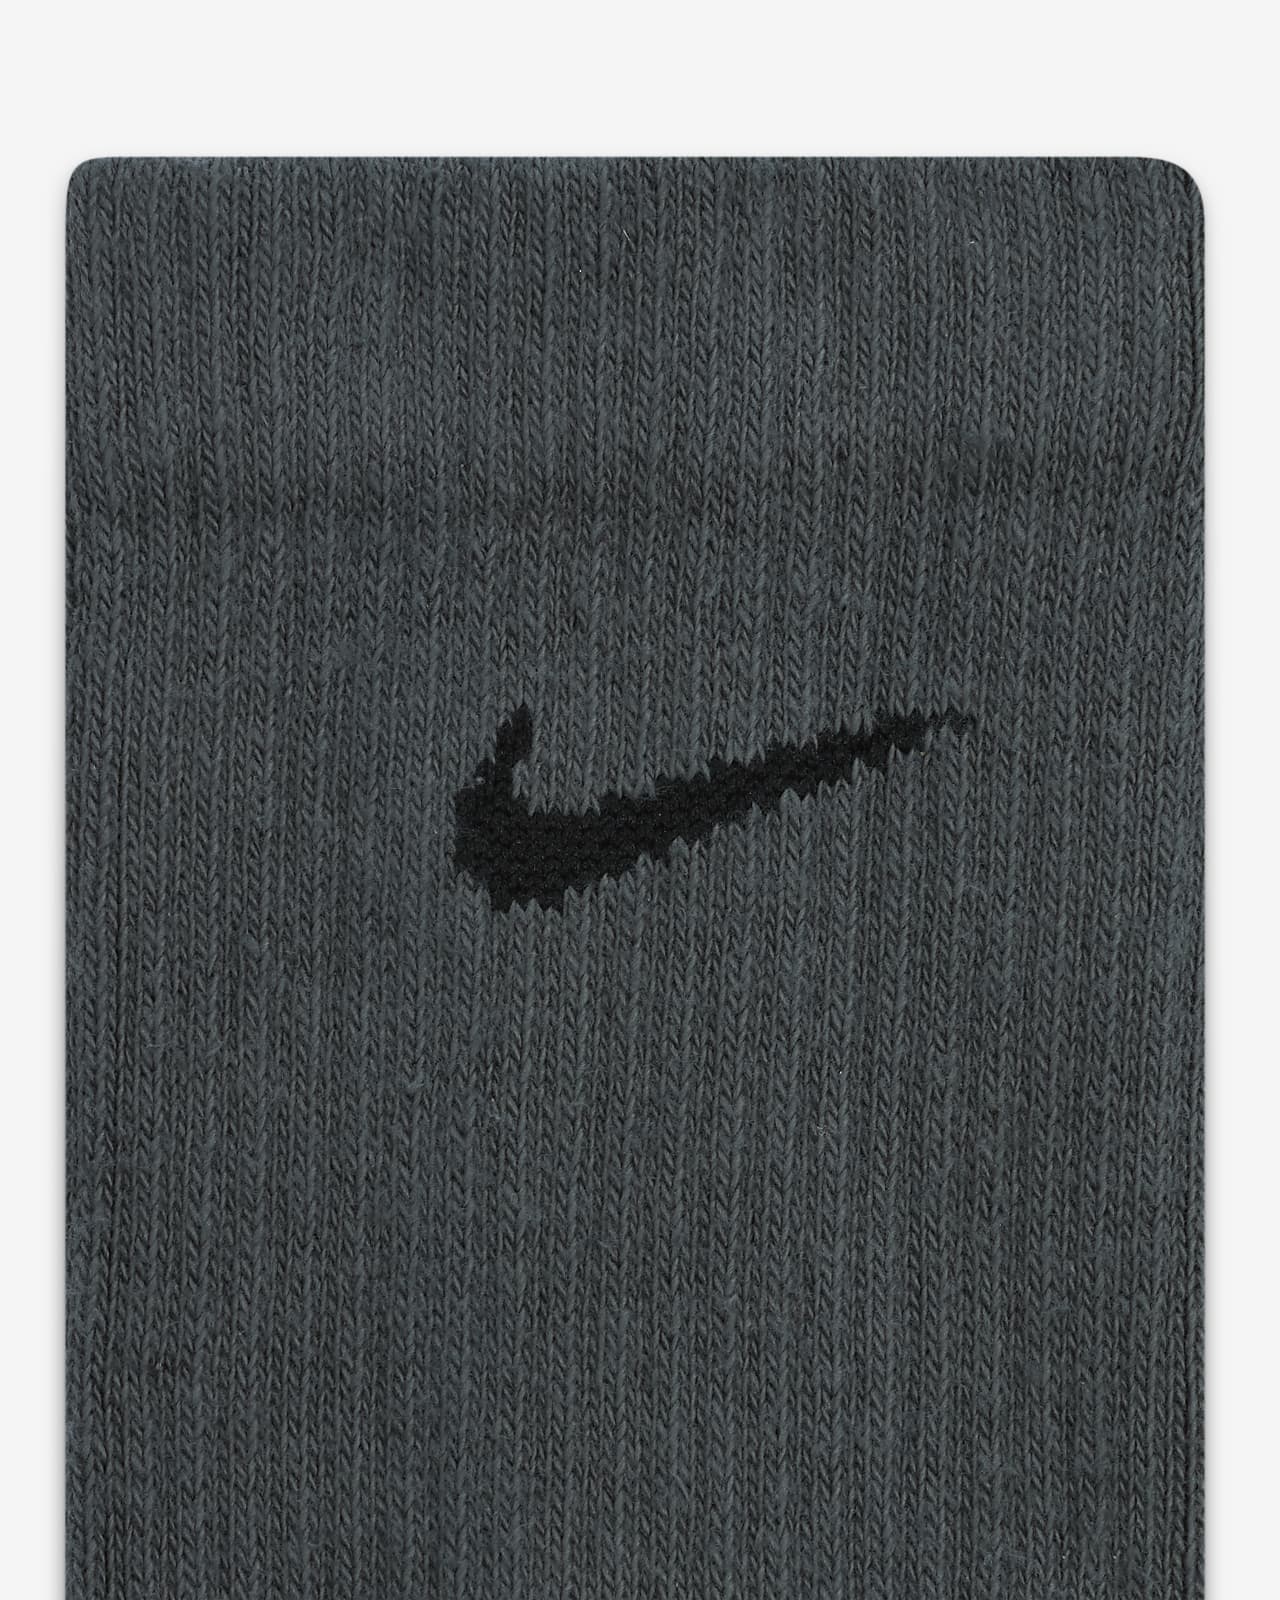 Nike Earth Tones Crew Socks Dri Fit, Unisex, 3 - Pack 